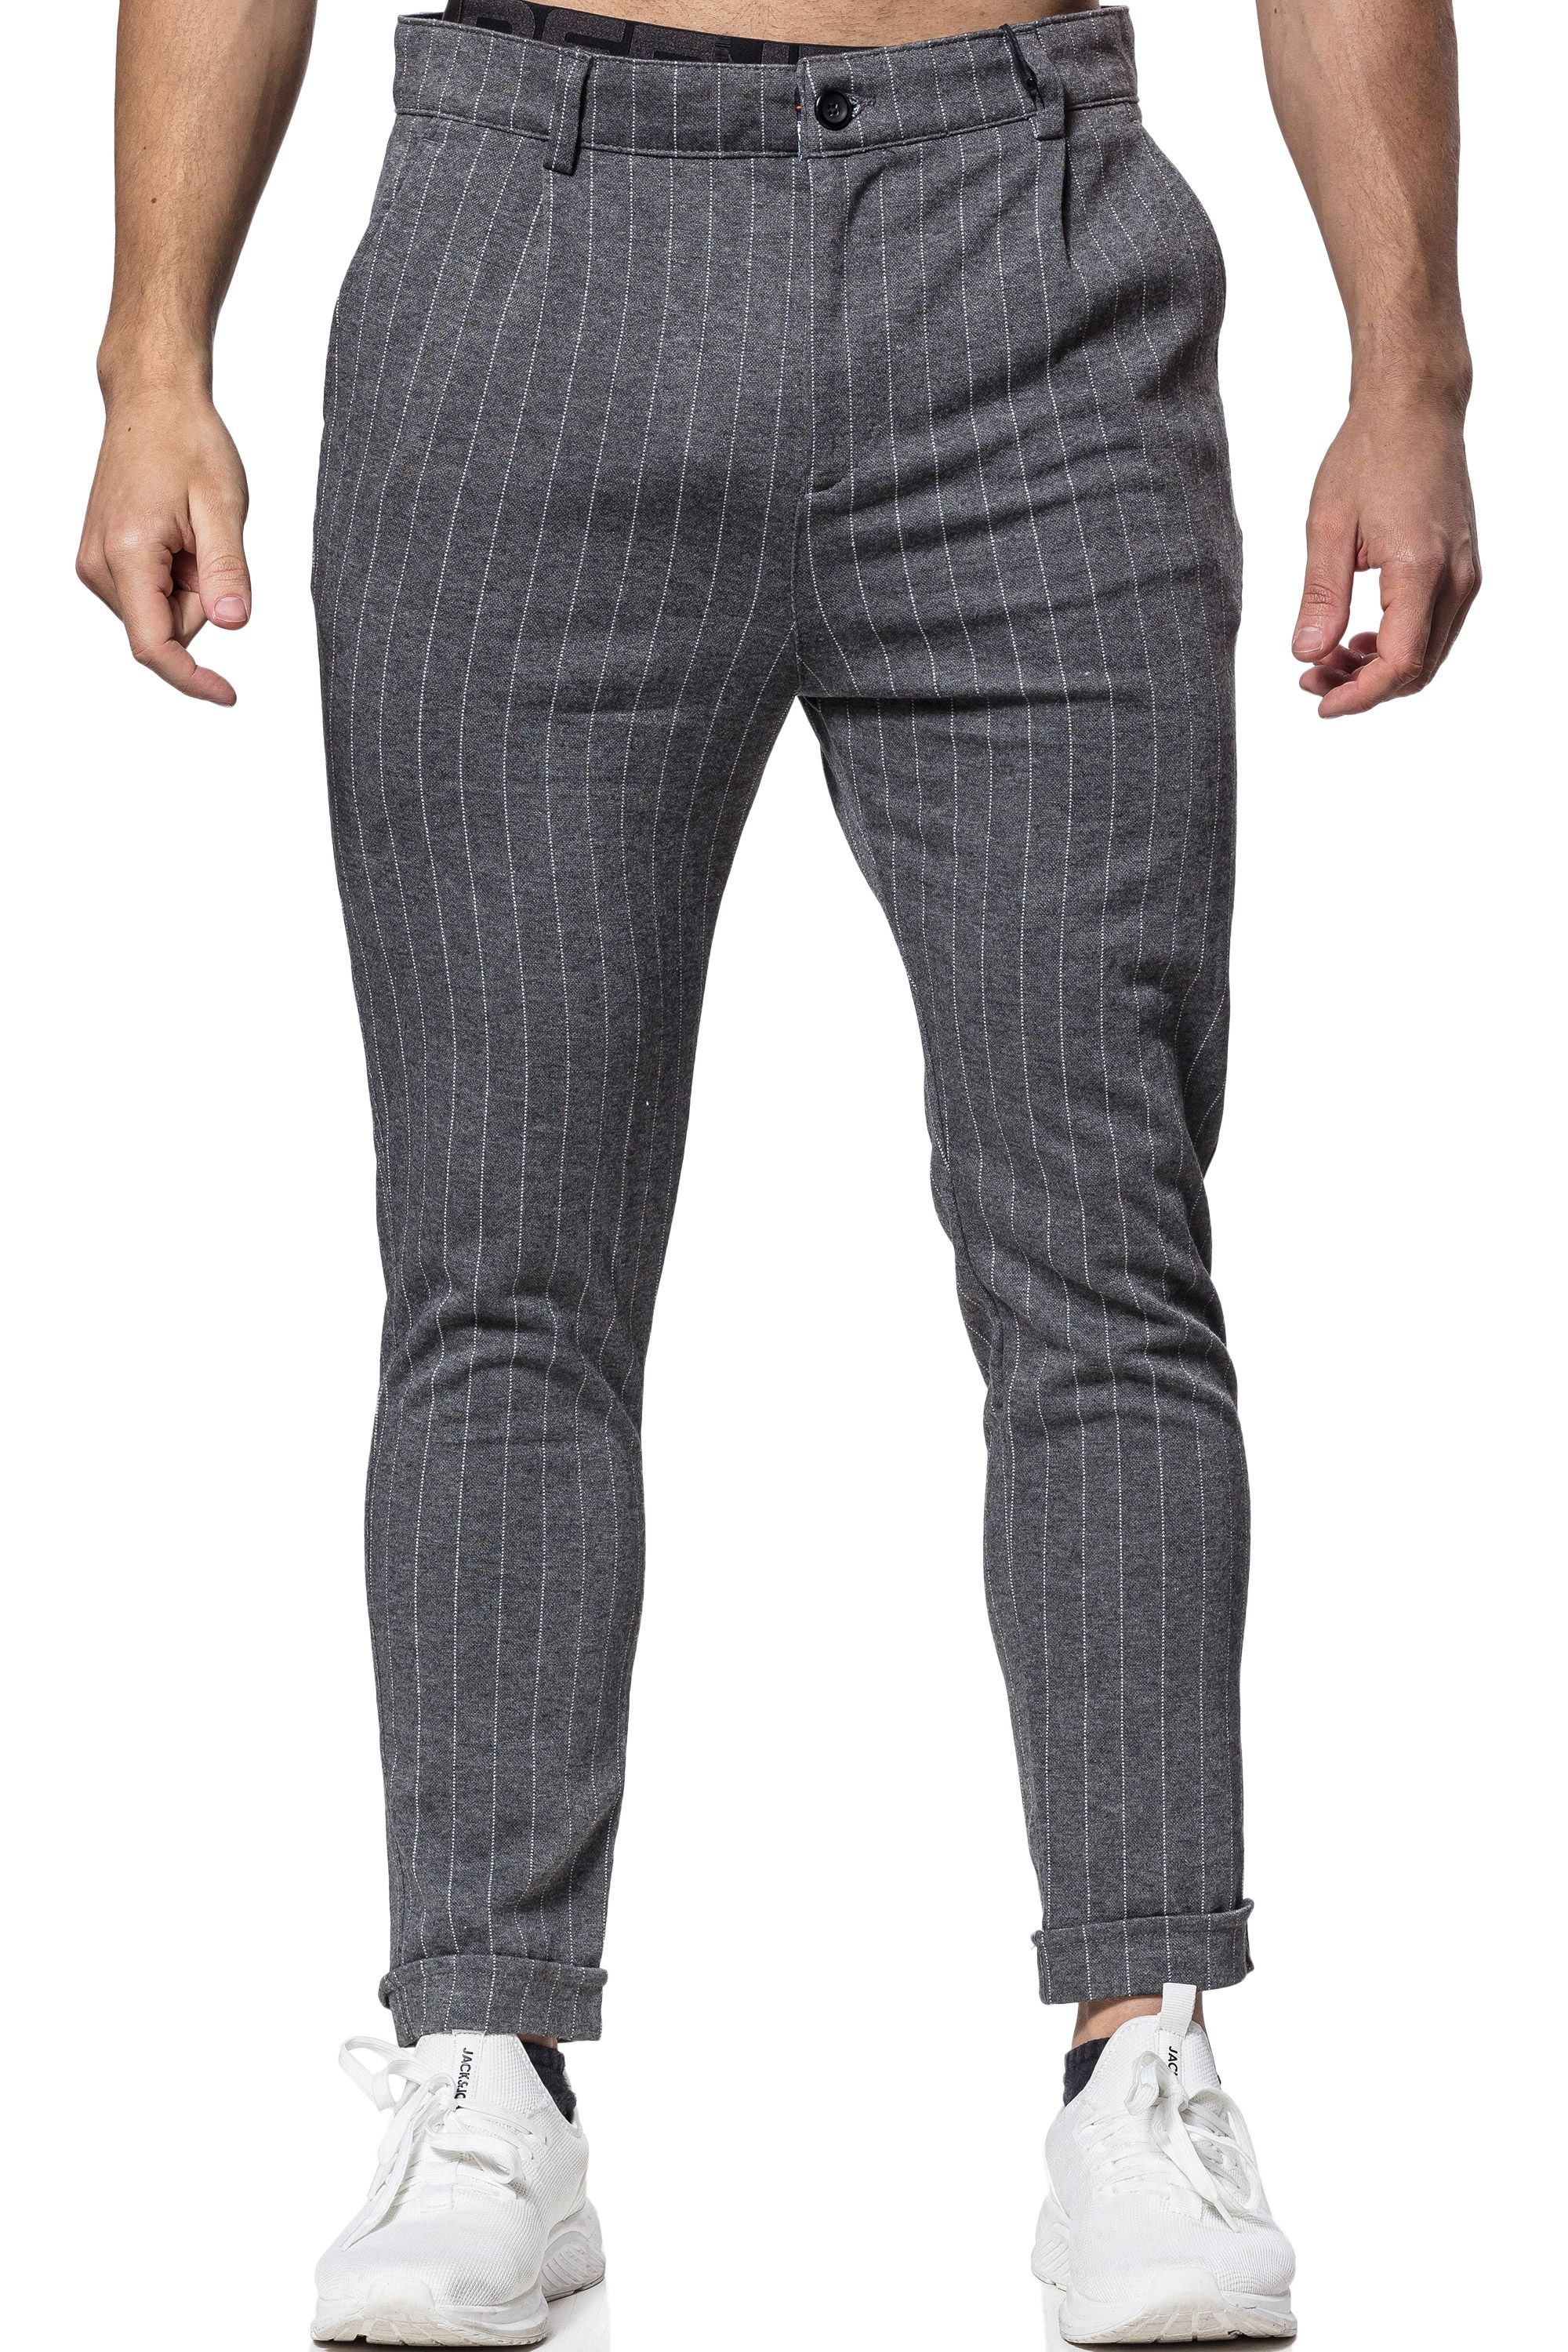 Elastic Gray Stripe Pants Carisma - Jerone.com